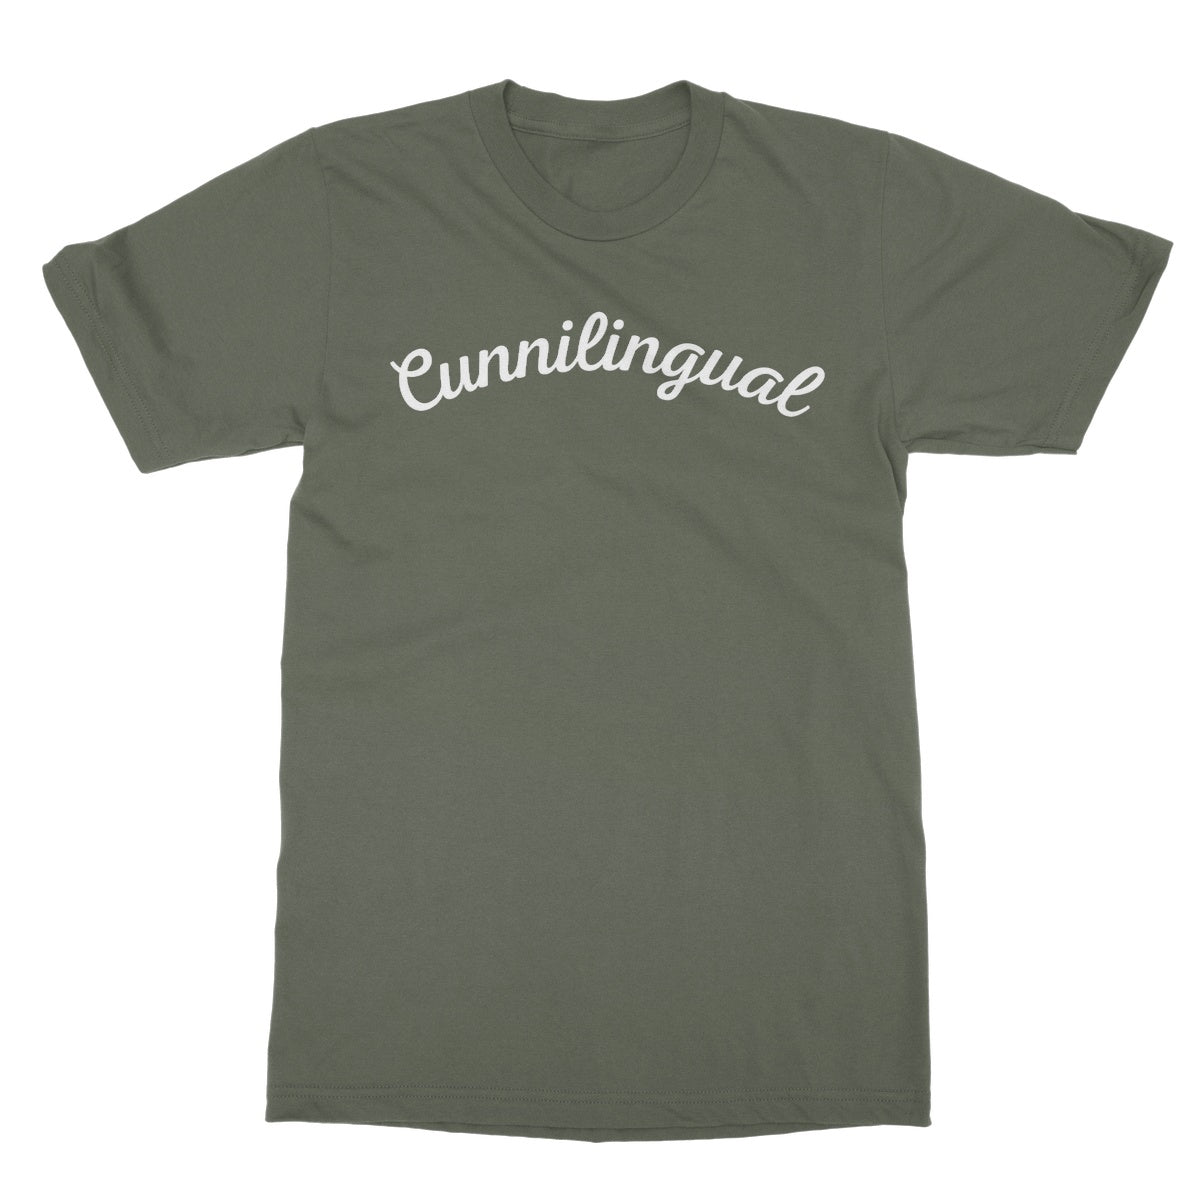 cunnilingual t shirt green